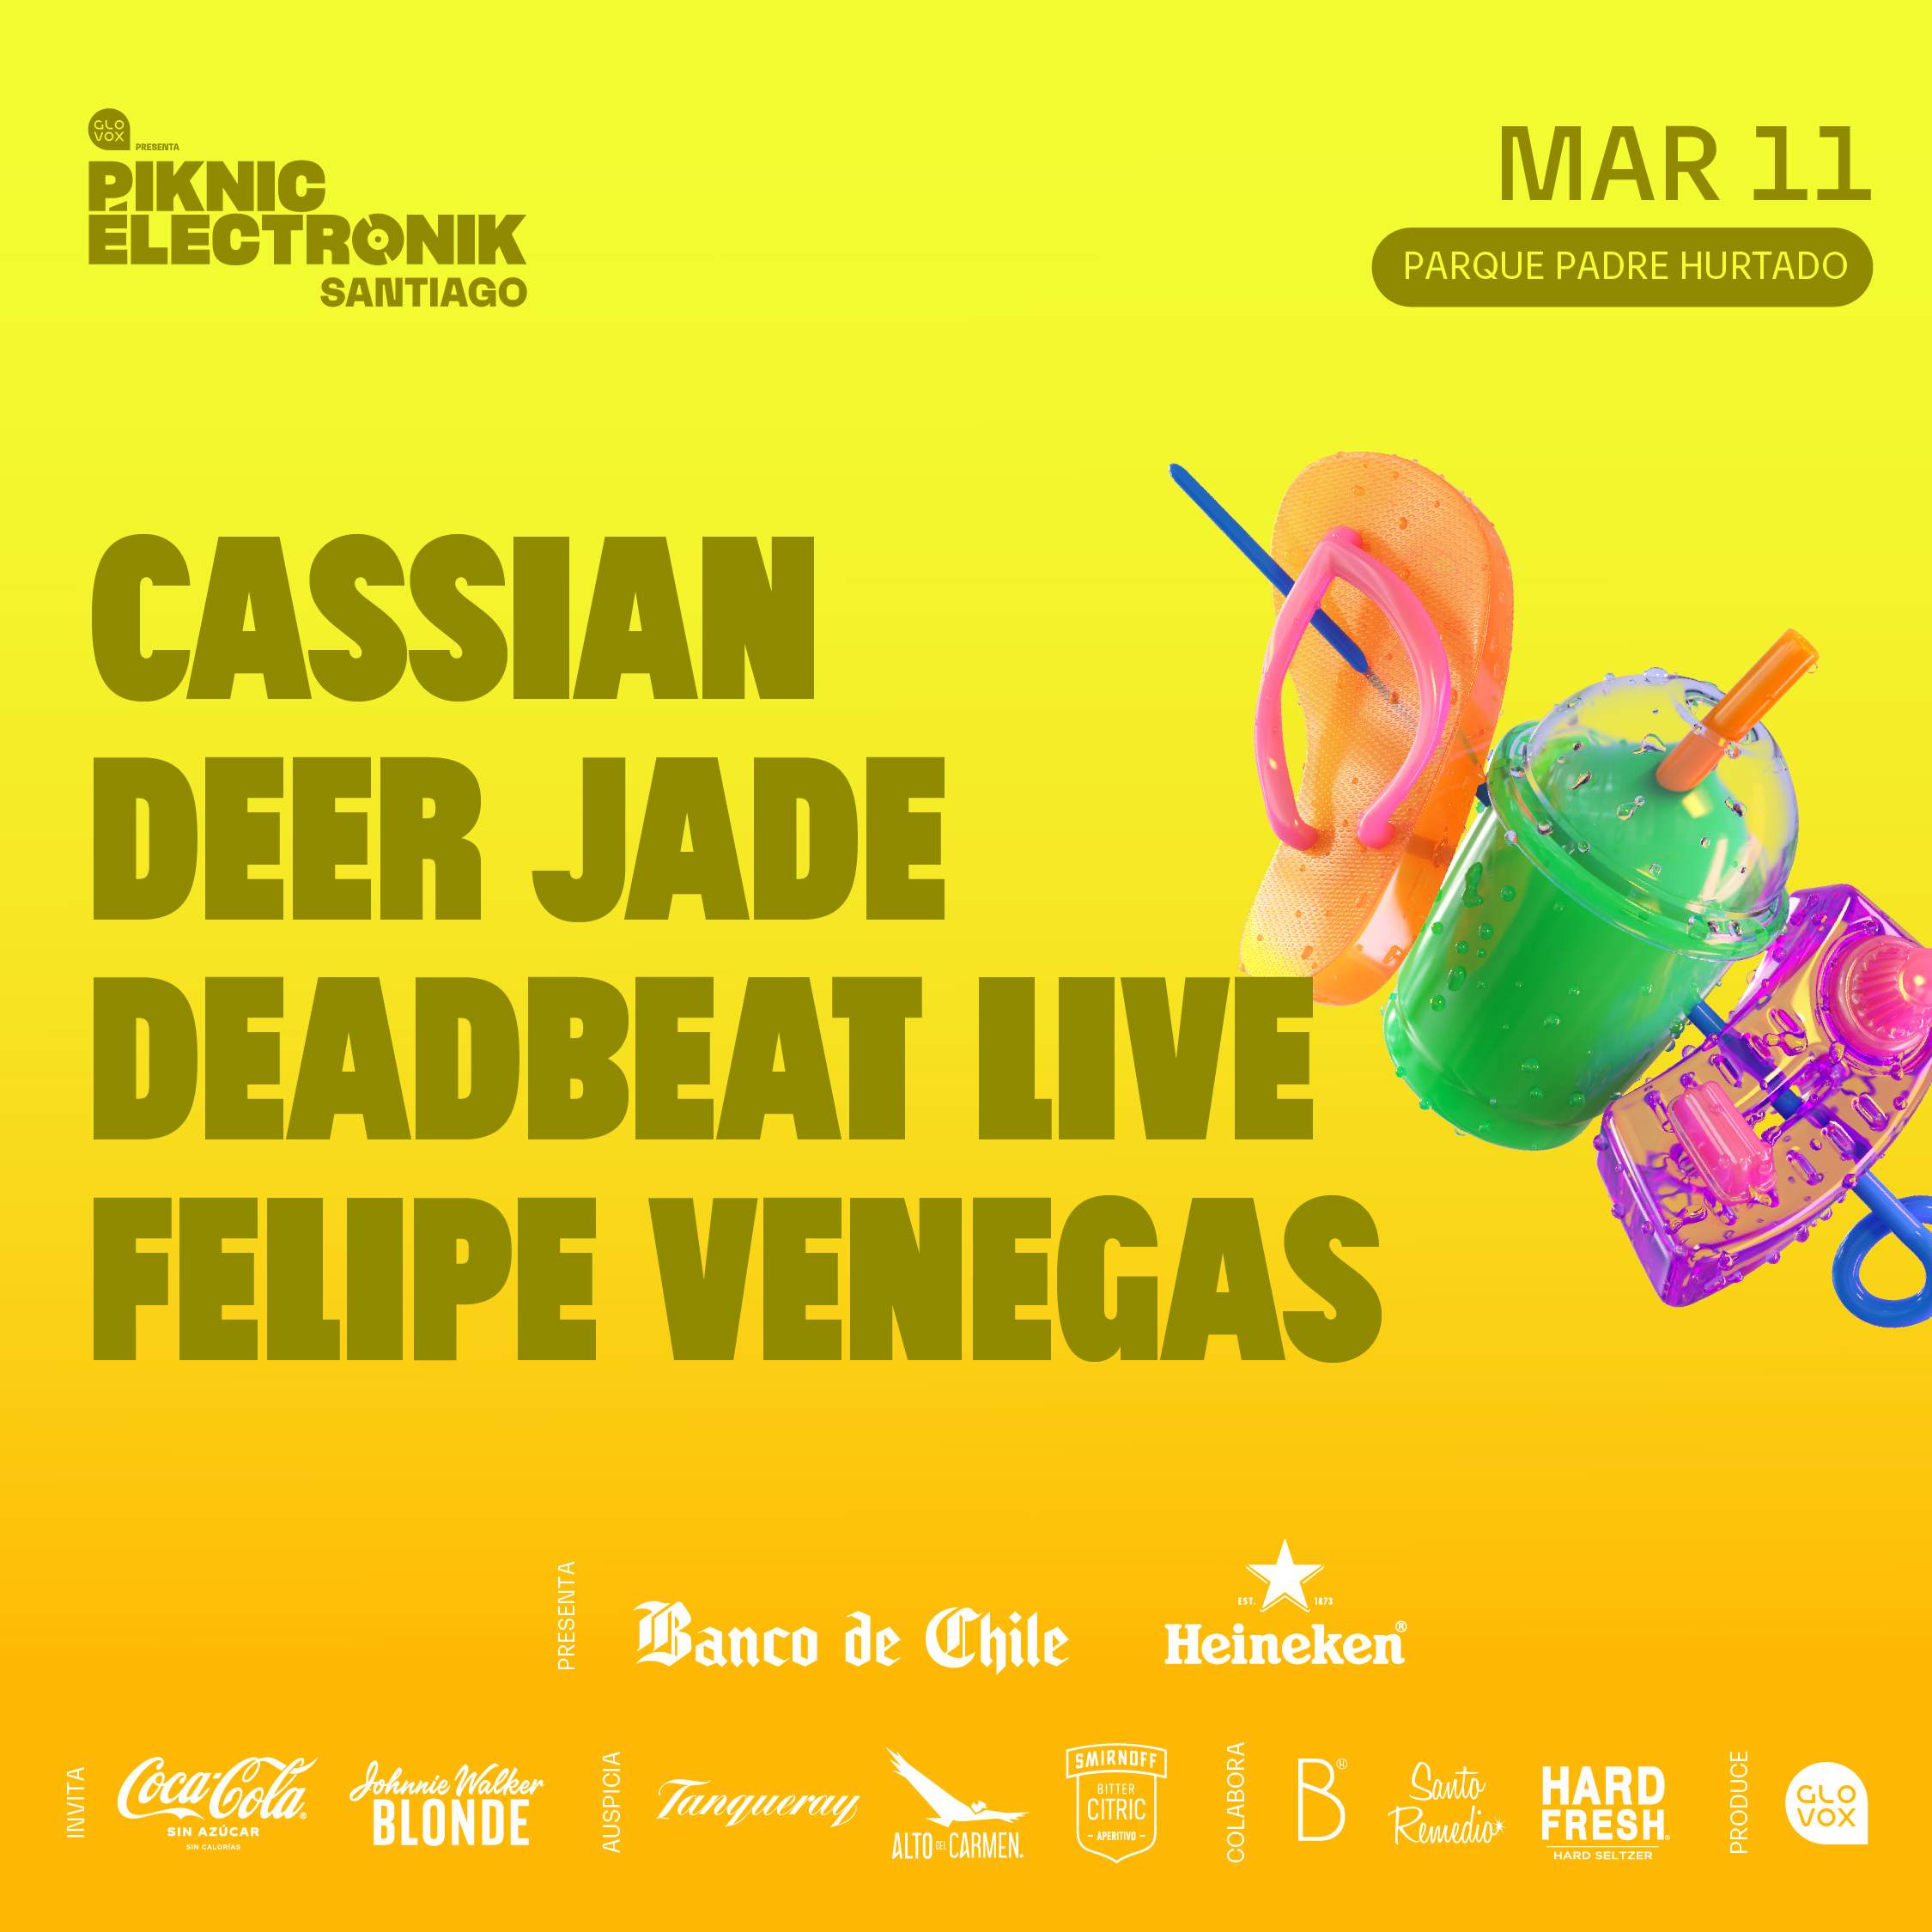 Piknic Électronik Santiago #7 - Cassian - Deer Jade - Deadbeat - Felipe Venegas - フライヤー表